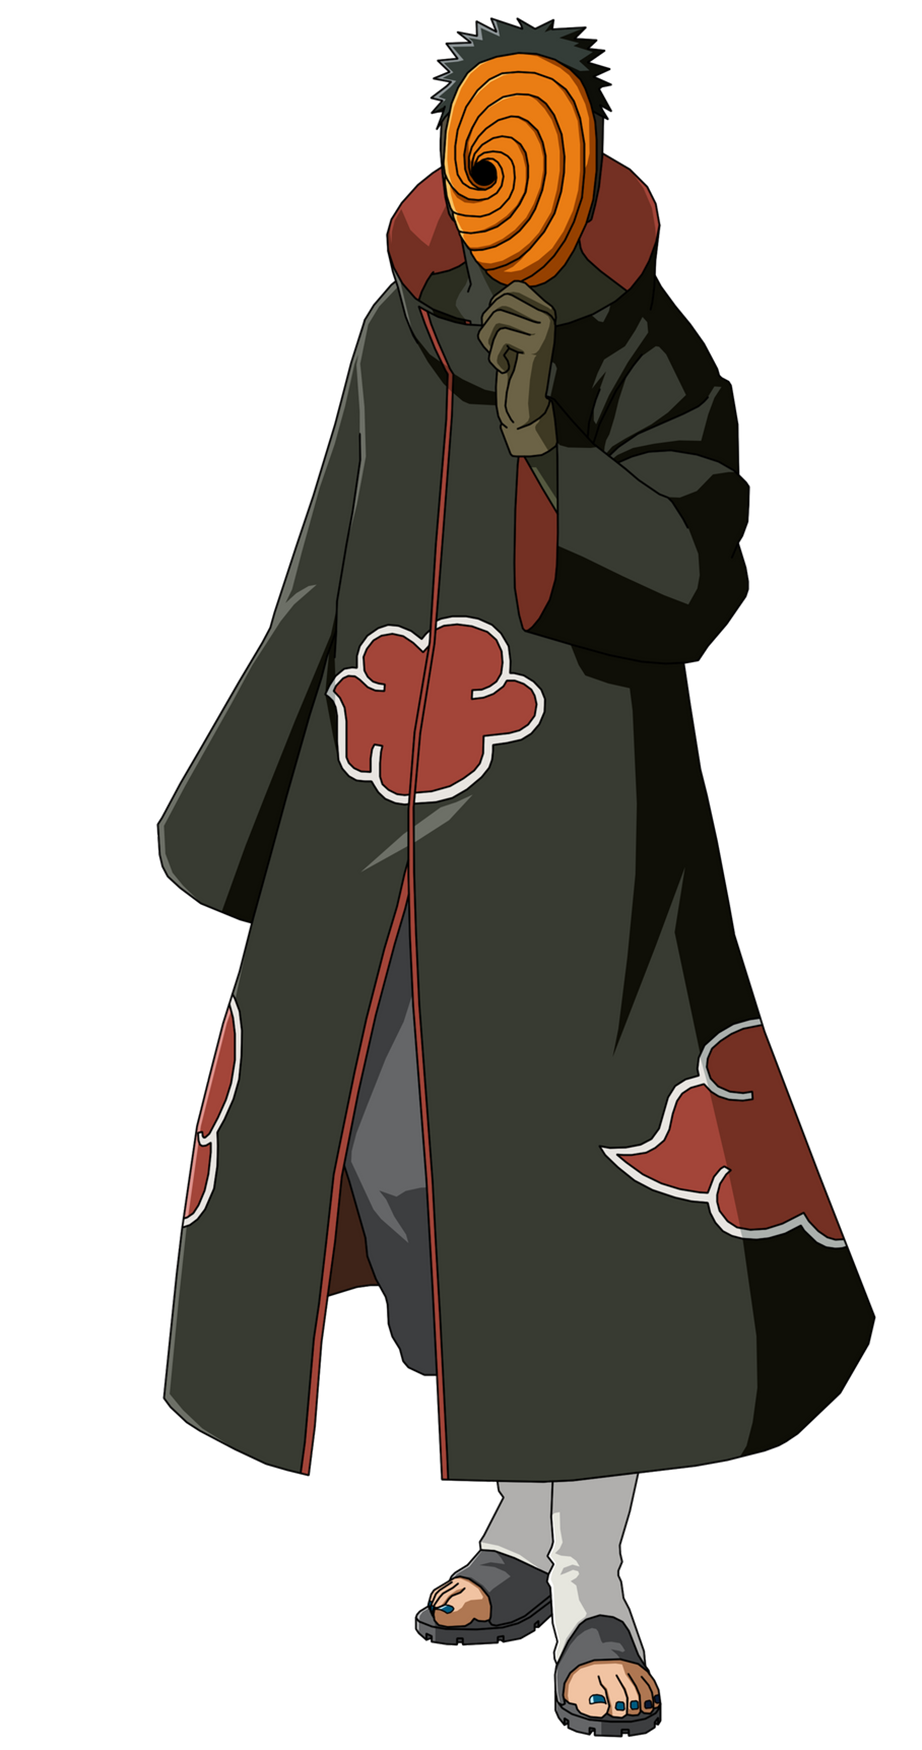 Naruto shippuden Ultimate ninja 5, Wiki